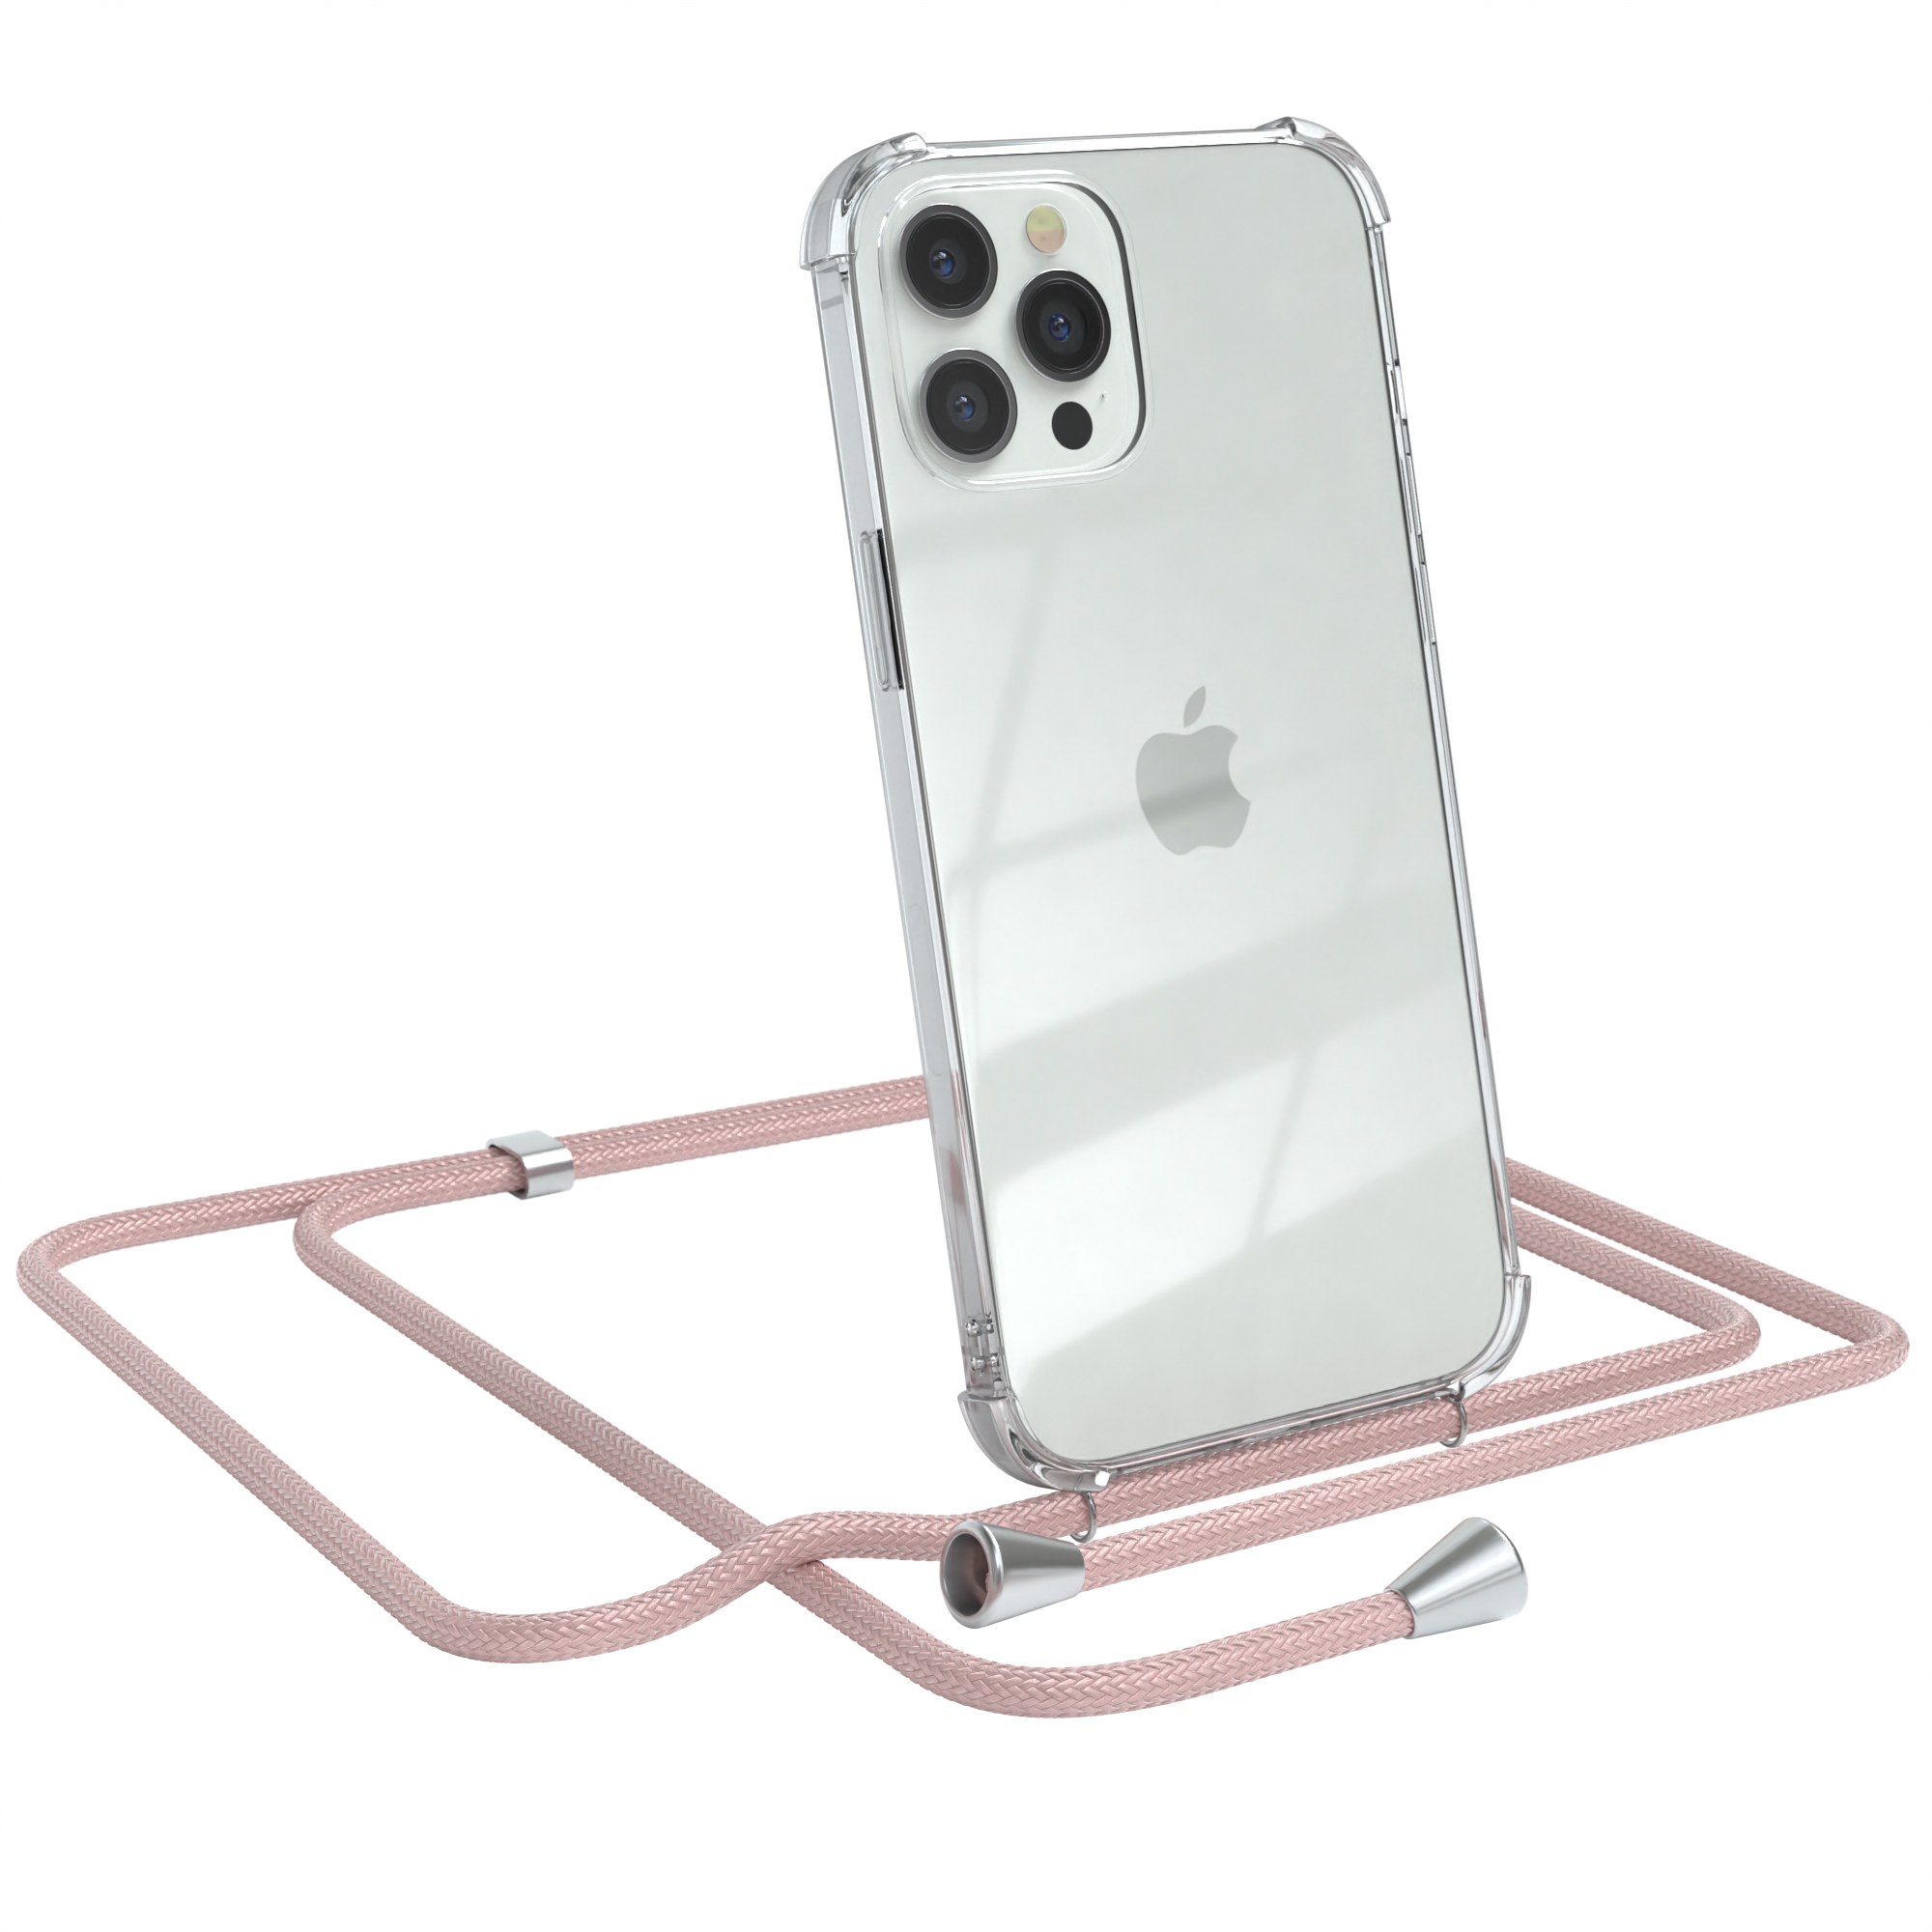 EAZY CASE Clear Cover Max, 12 Clips Pro Umhängetasche, iPhone Silber Umhängeband, Apple, mit Rosé 